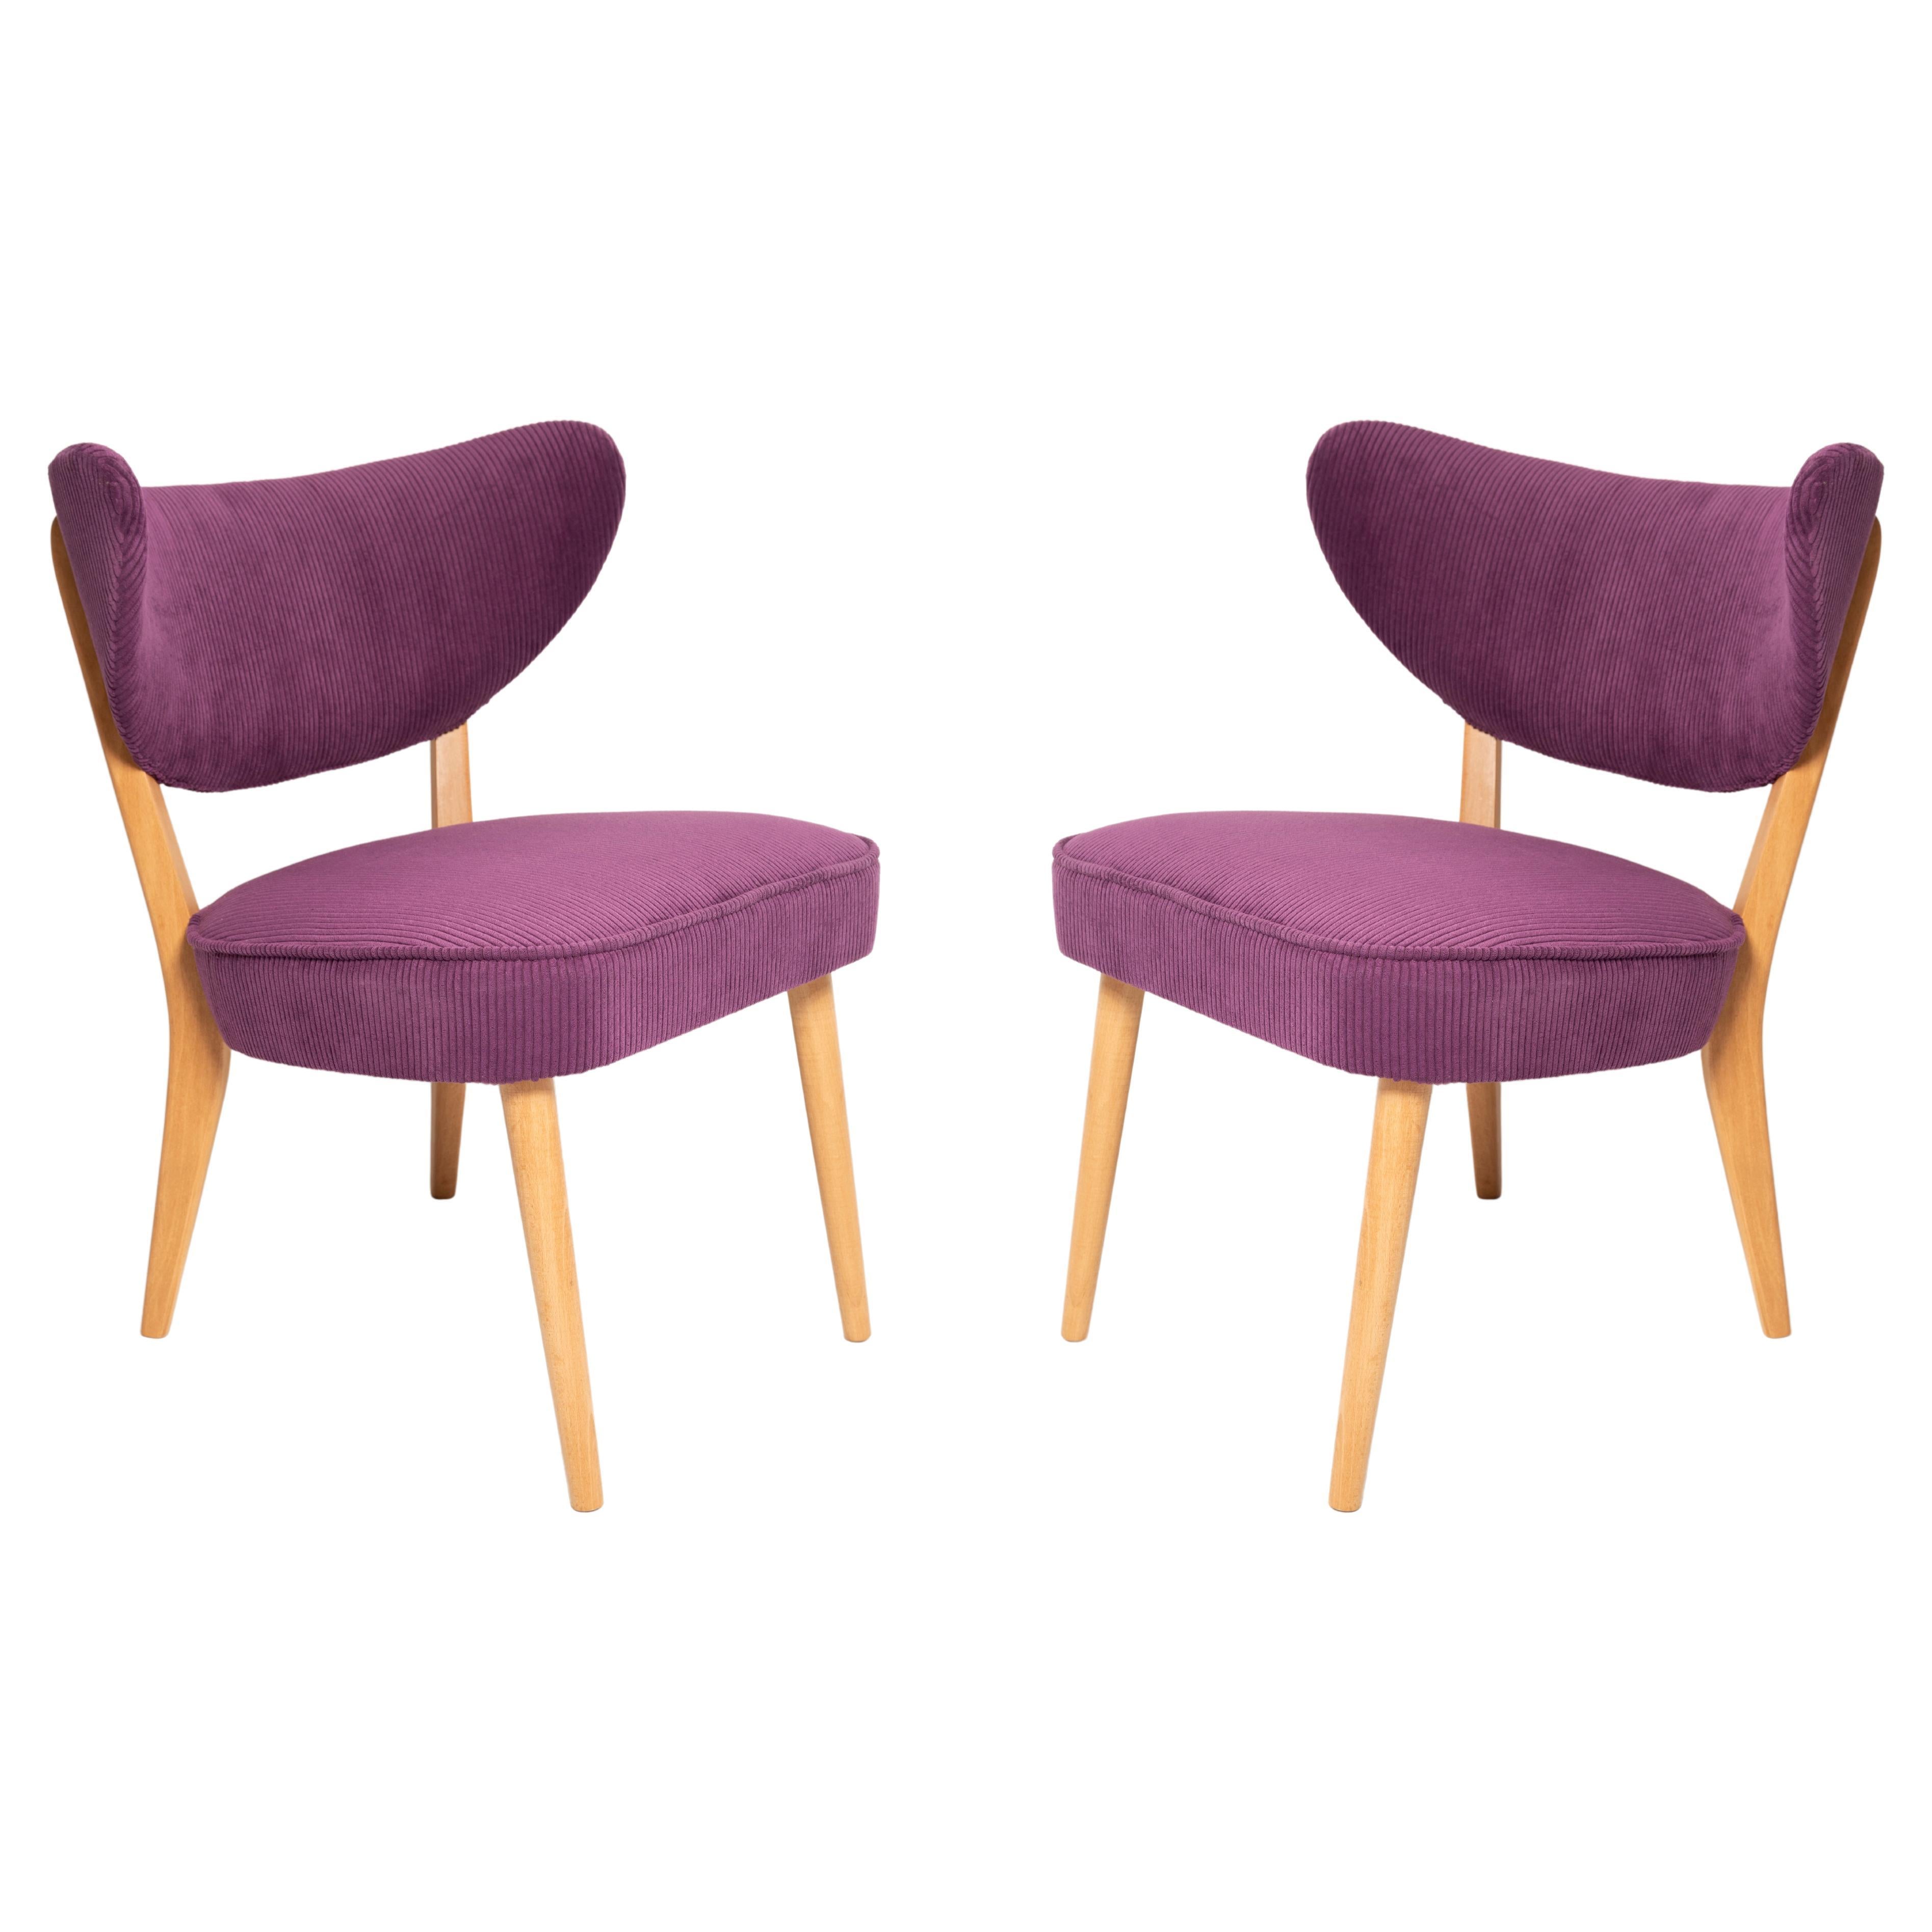 Pair of Midcentury Style Violet Velvet Club Chairs, by Vintola Studio, Europe